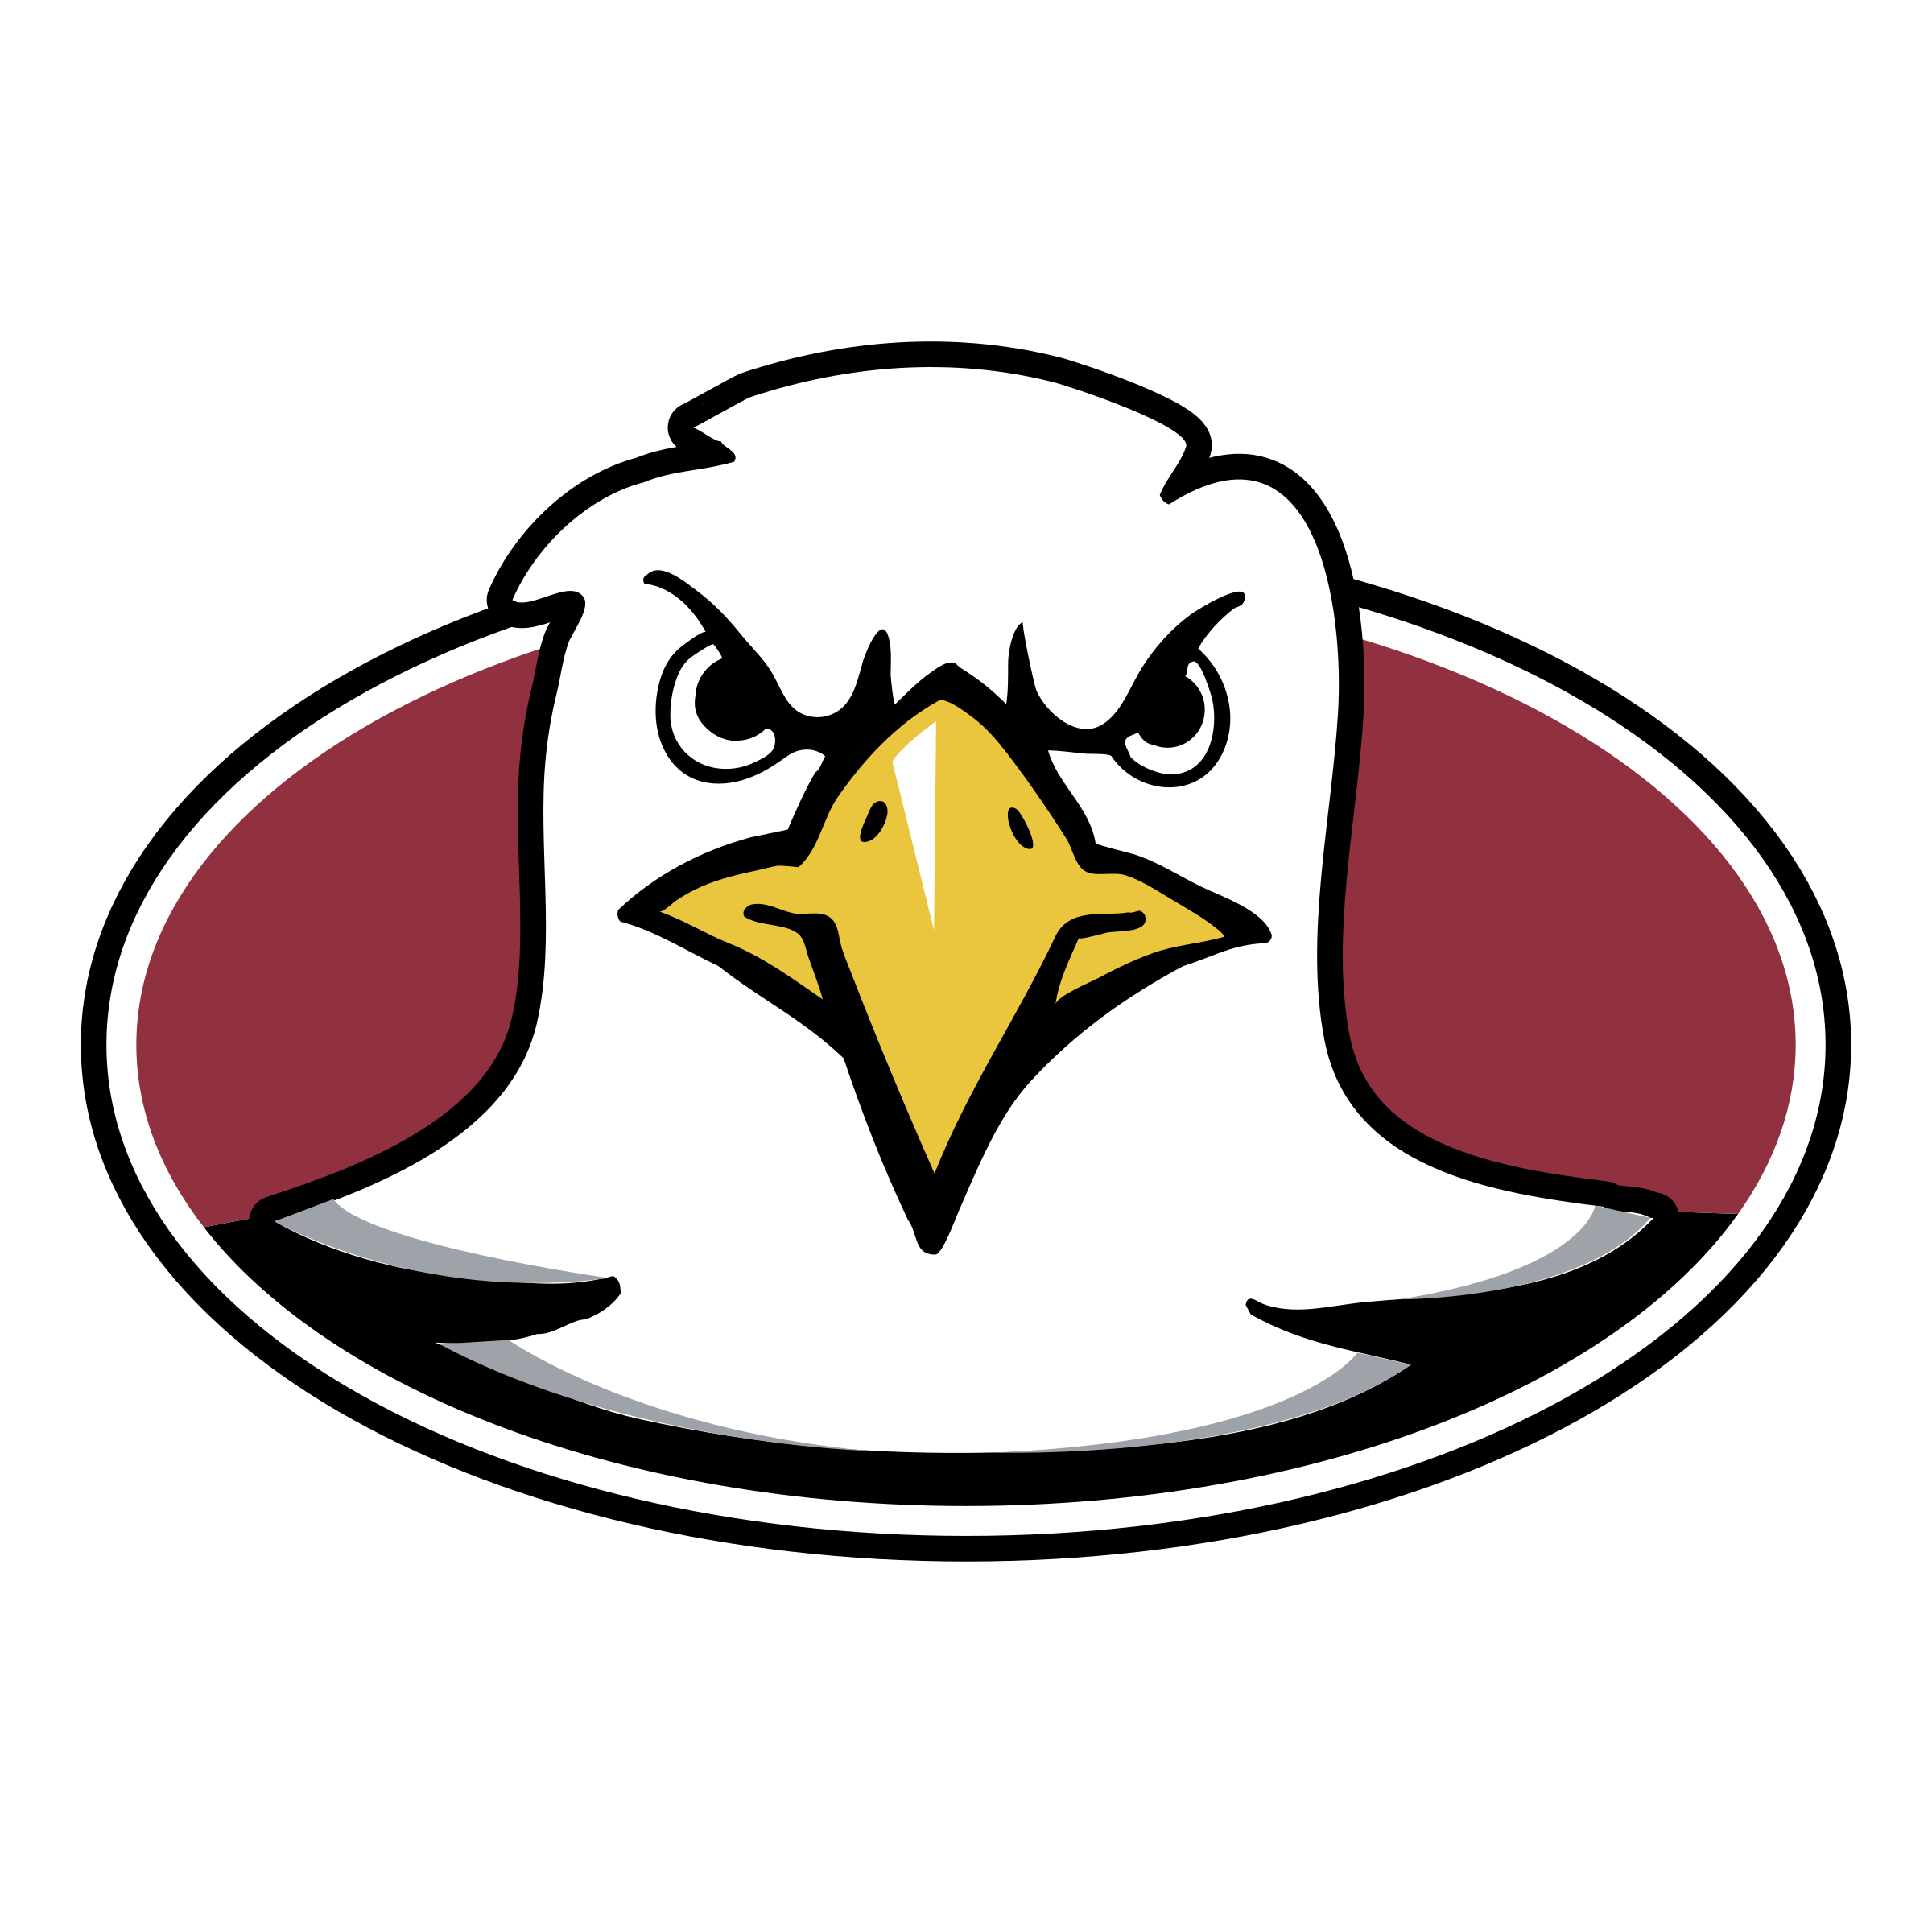 Boston College Logo - Boston College Eagles 05 Logo PNG Transparent & SVG Vector